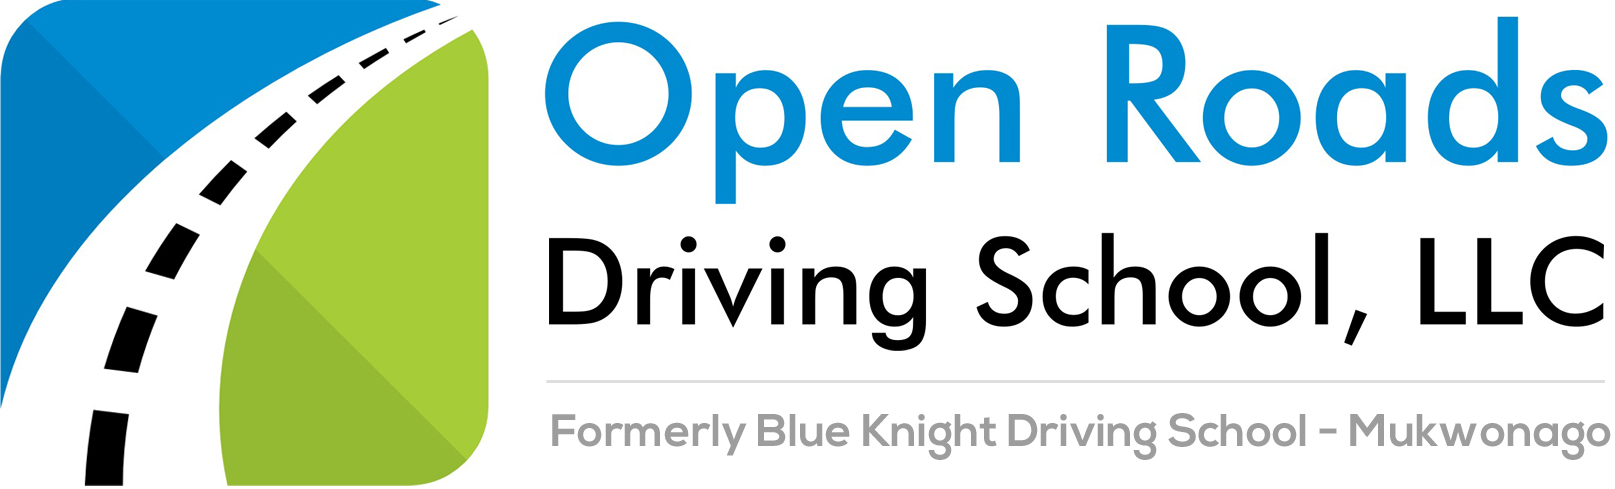 Open Roads Driving School LLC | Muskego